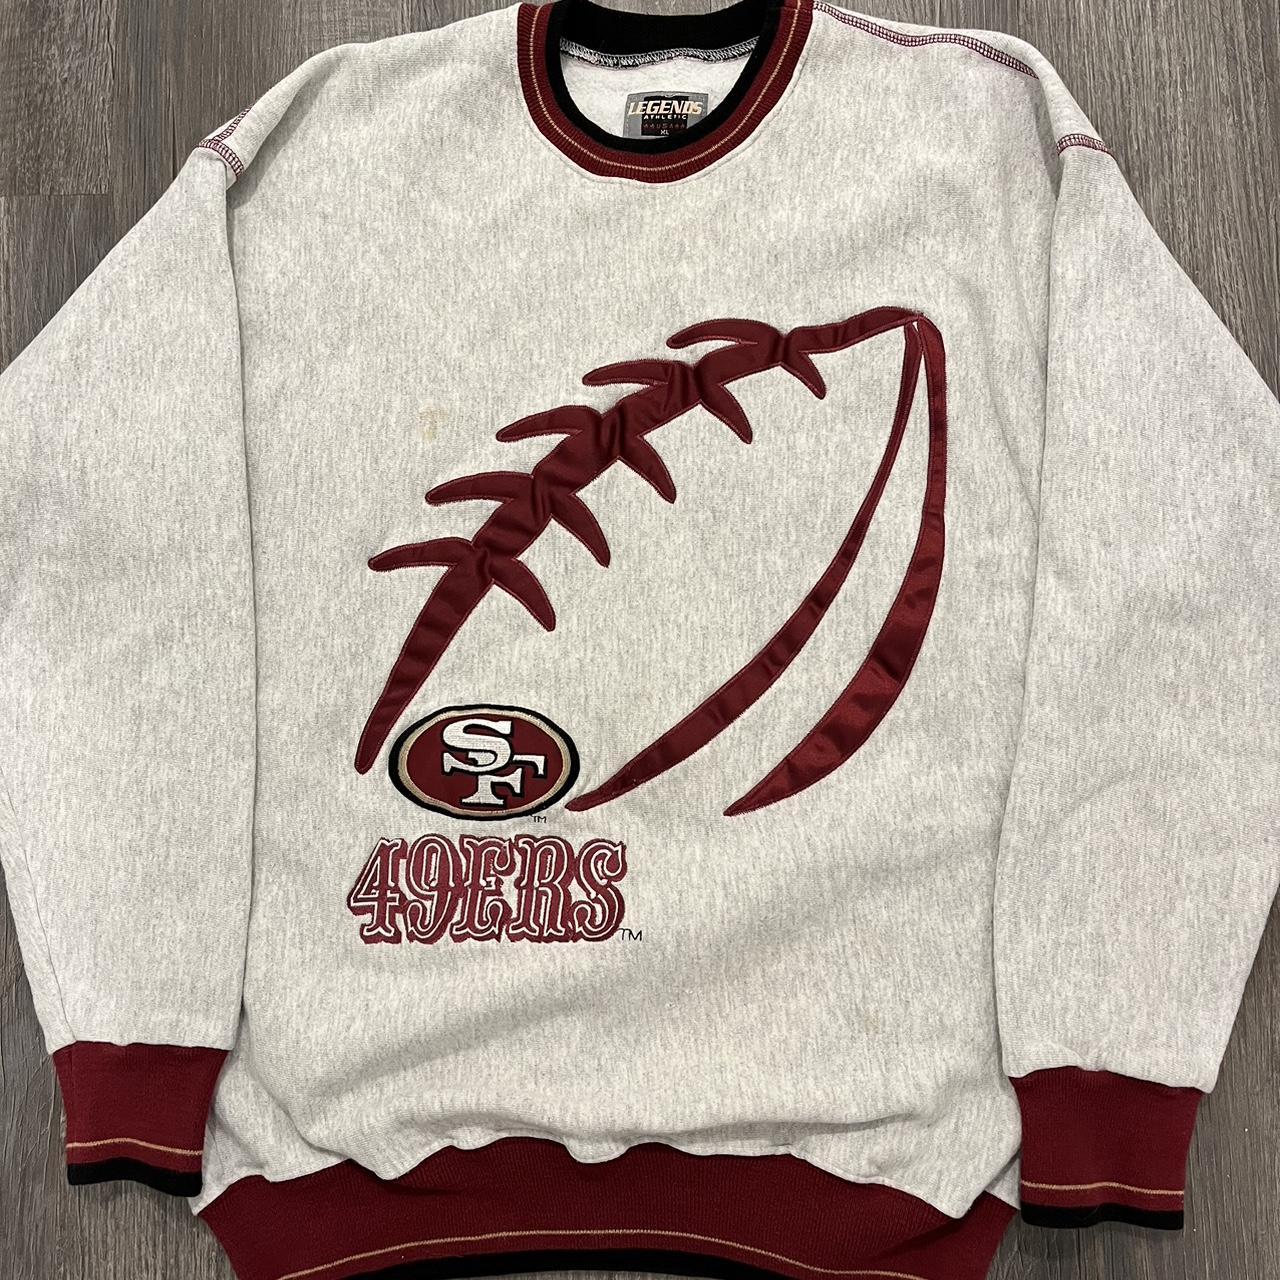 Vintage 49ers Sweatshirt